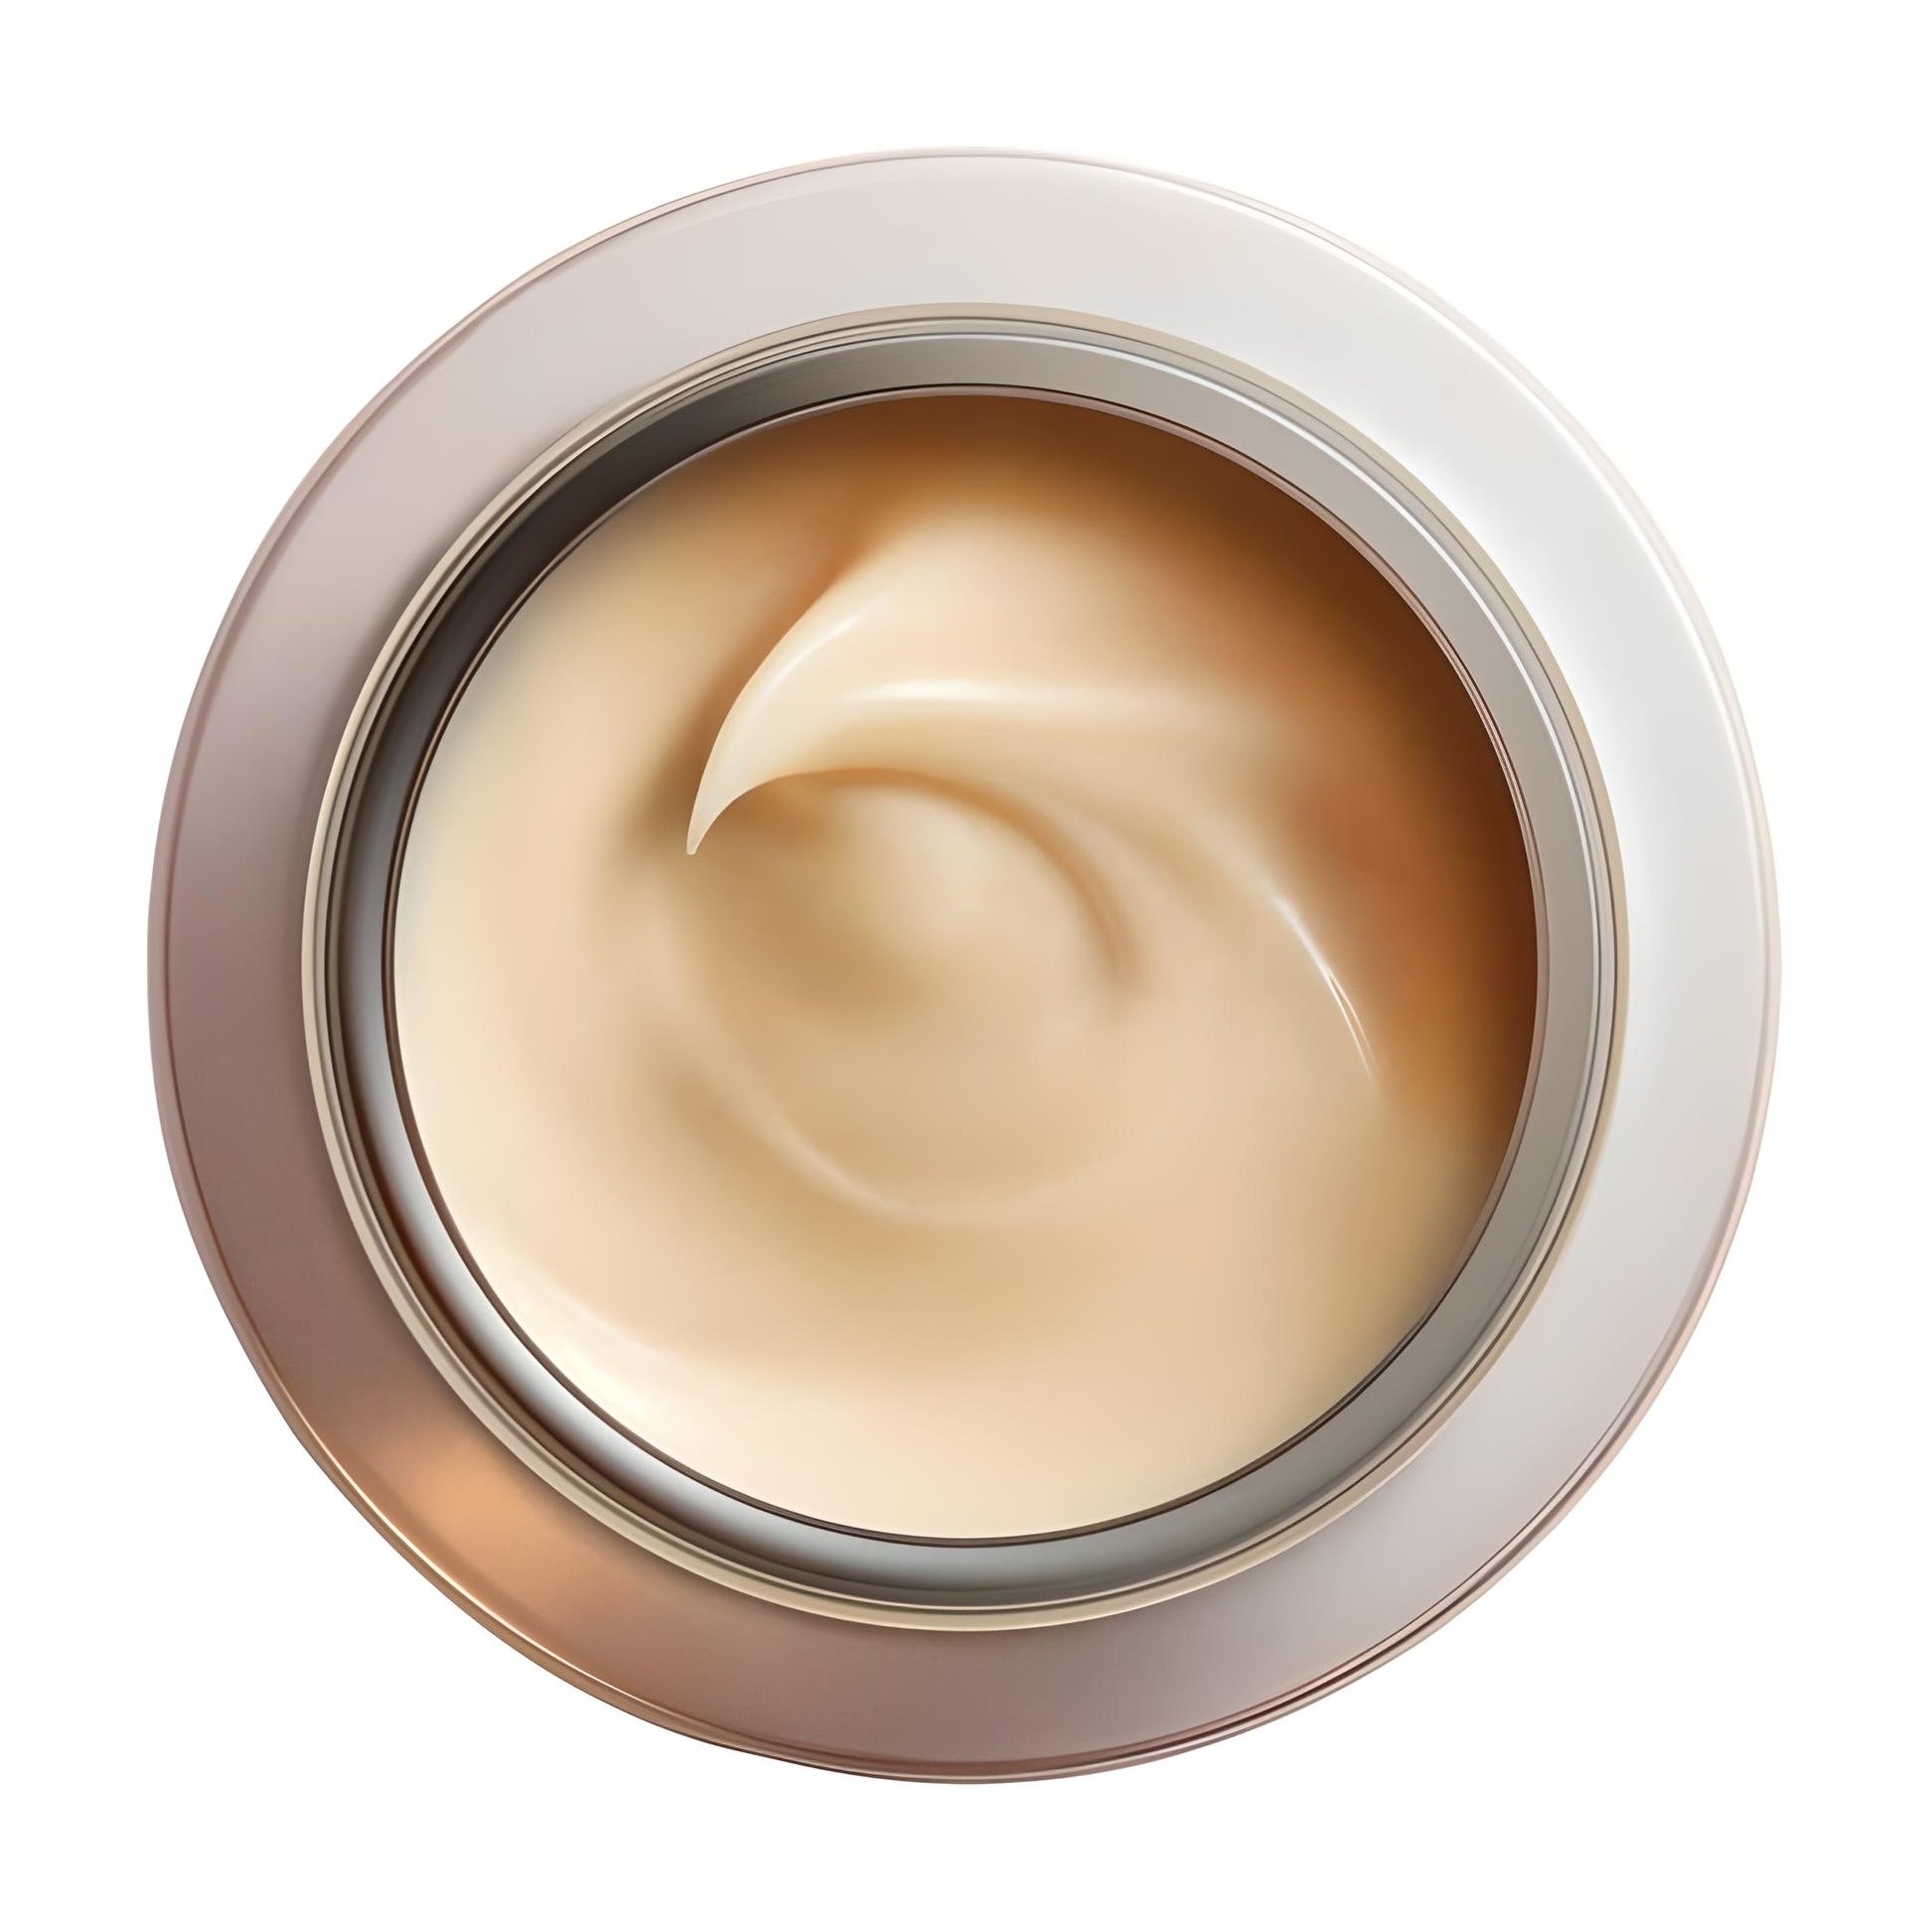 BENEFIANCE OVERNIGHT wrinkle resisting cream